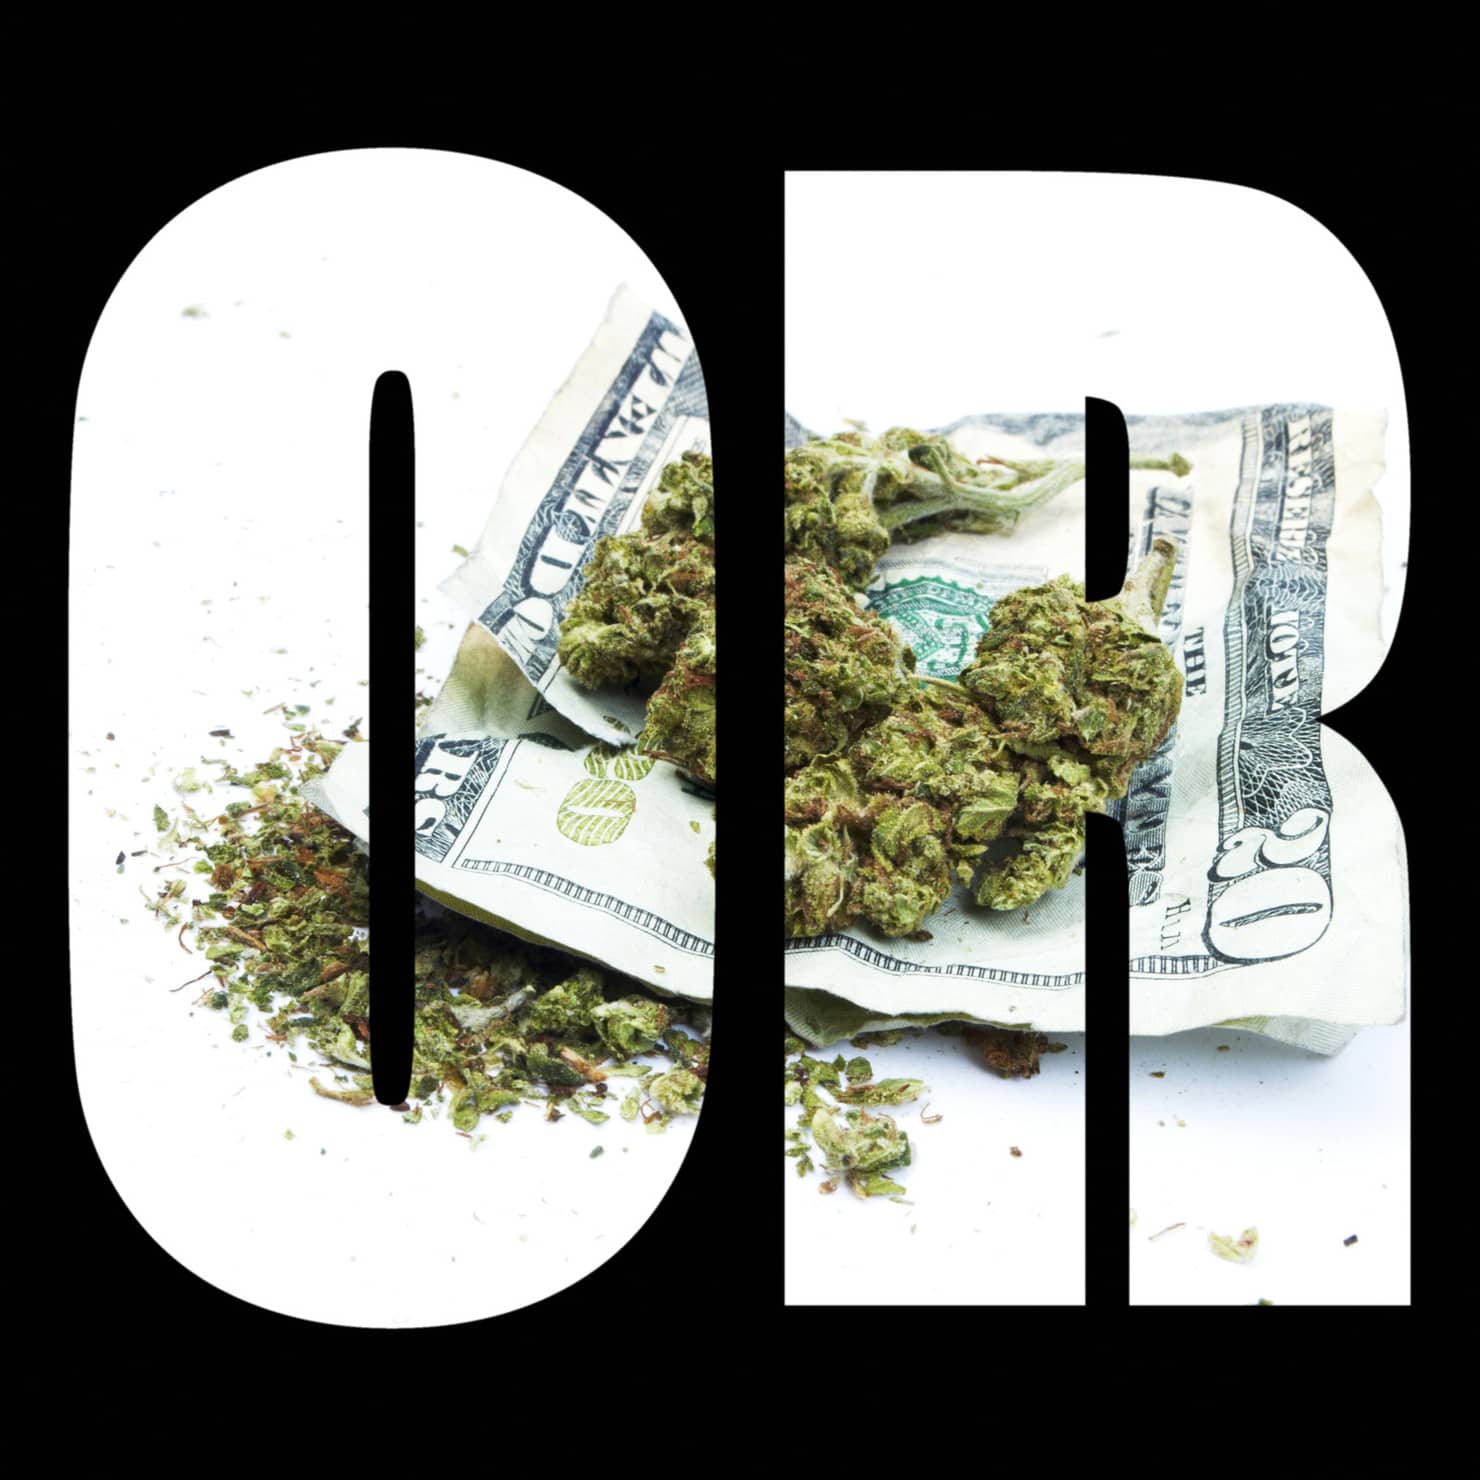 Oregon Marijuana laws. Weed on money.